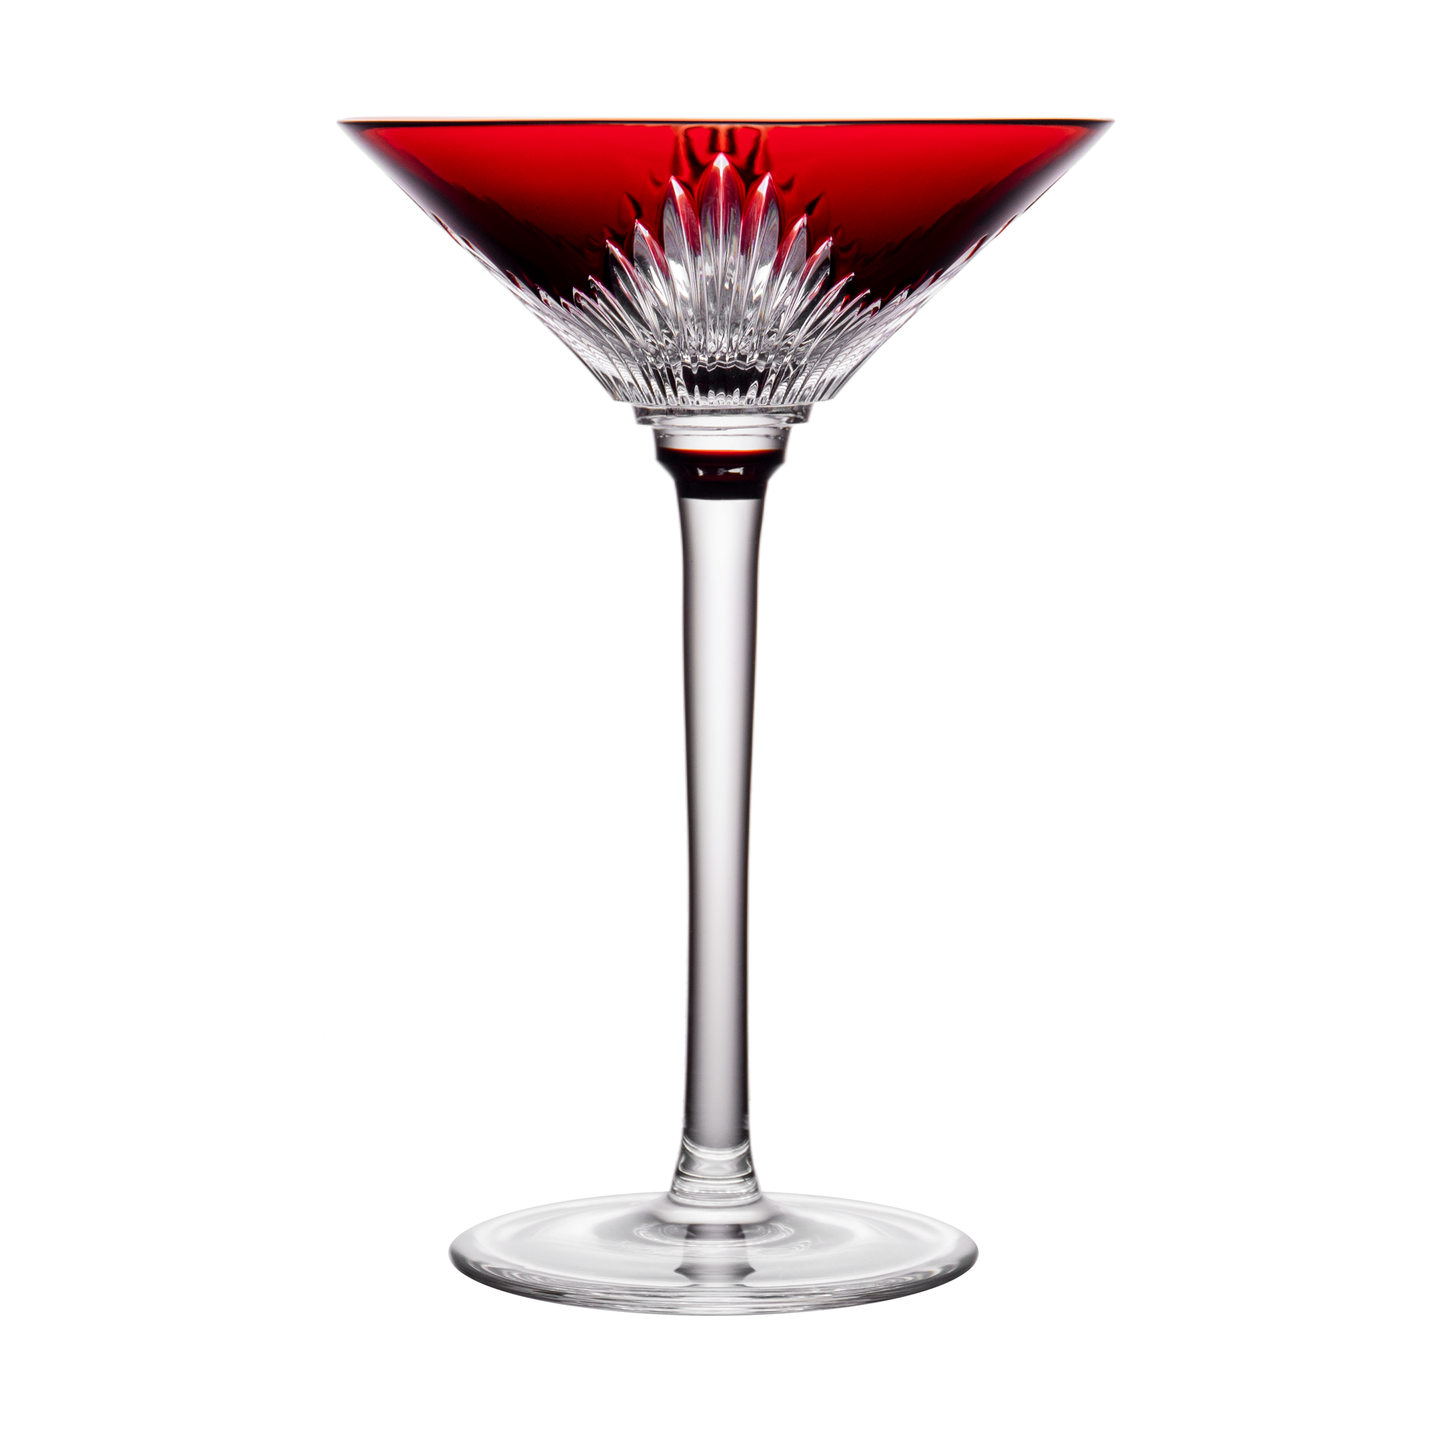 London Designer Ruby Red Martini Glass